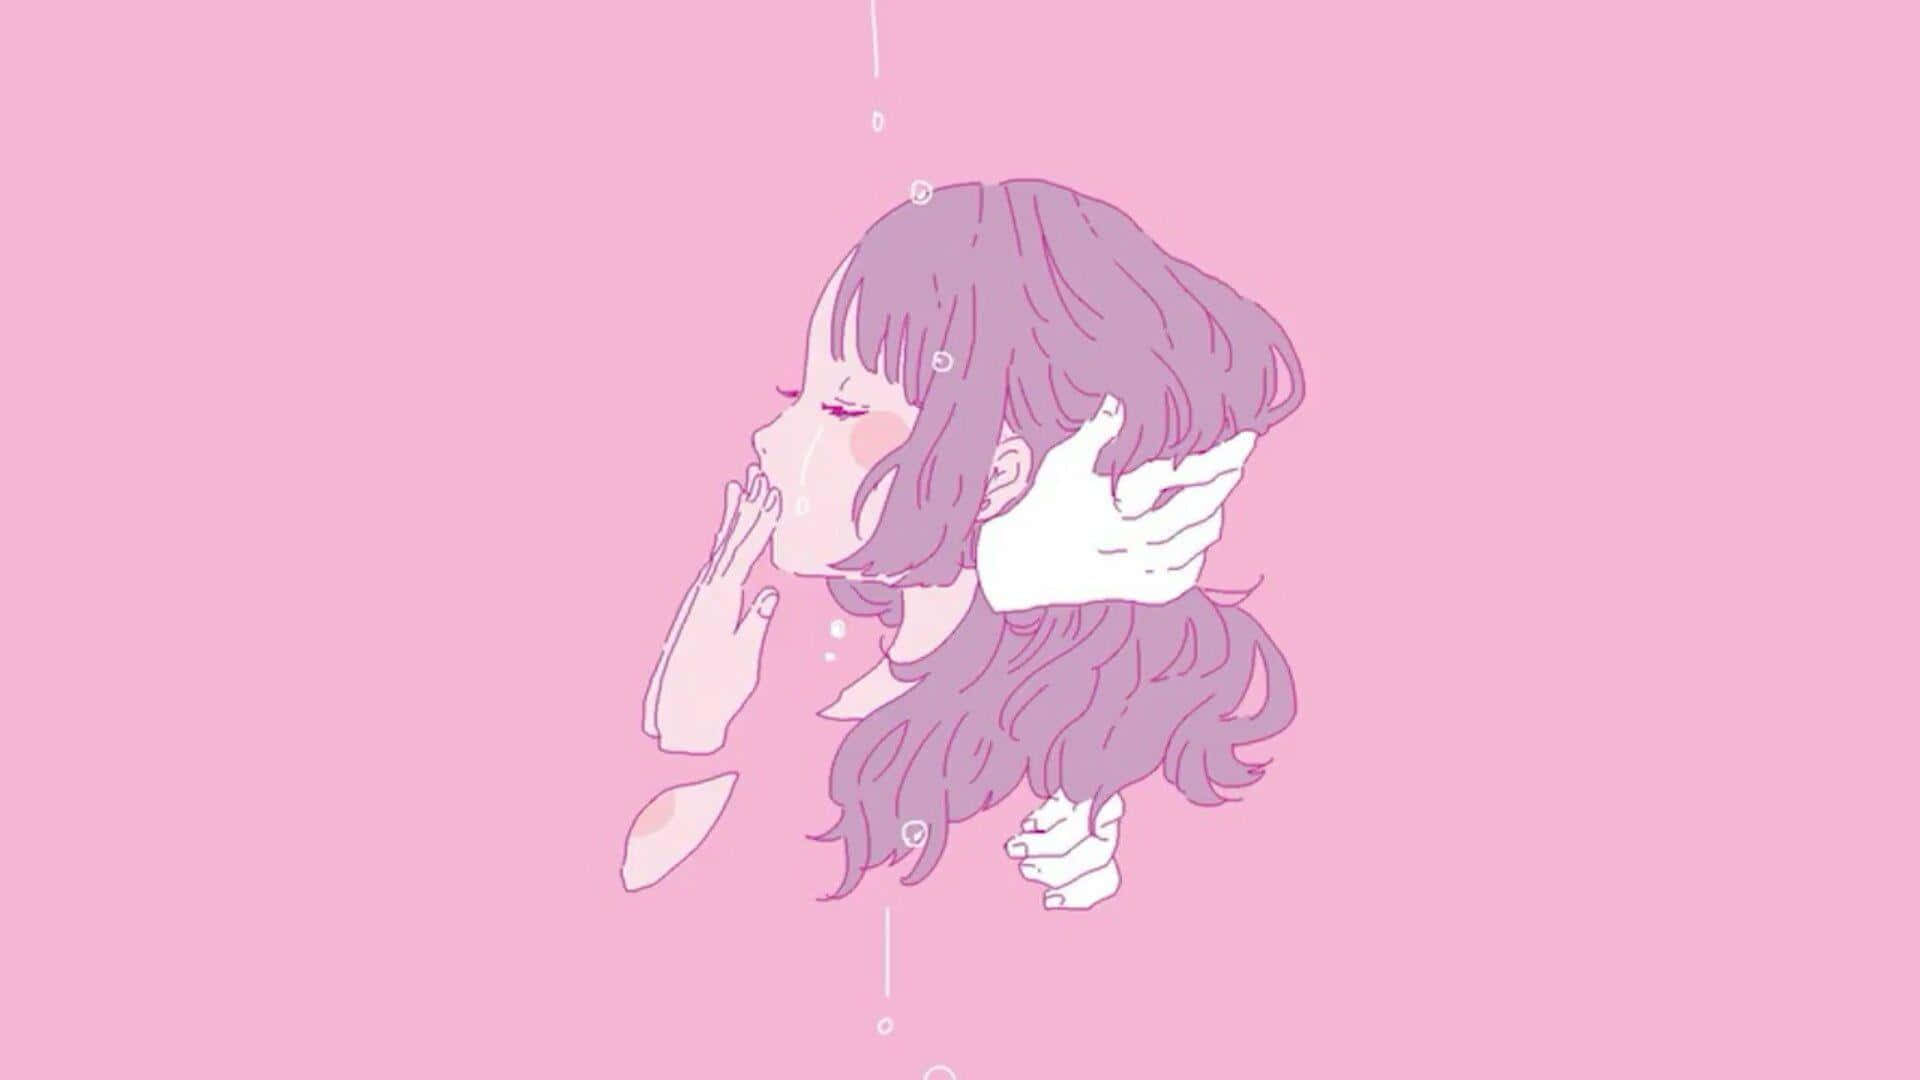 Kawaii Pink Aesthetic Girl Illustration Wallpaper